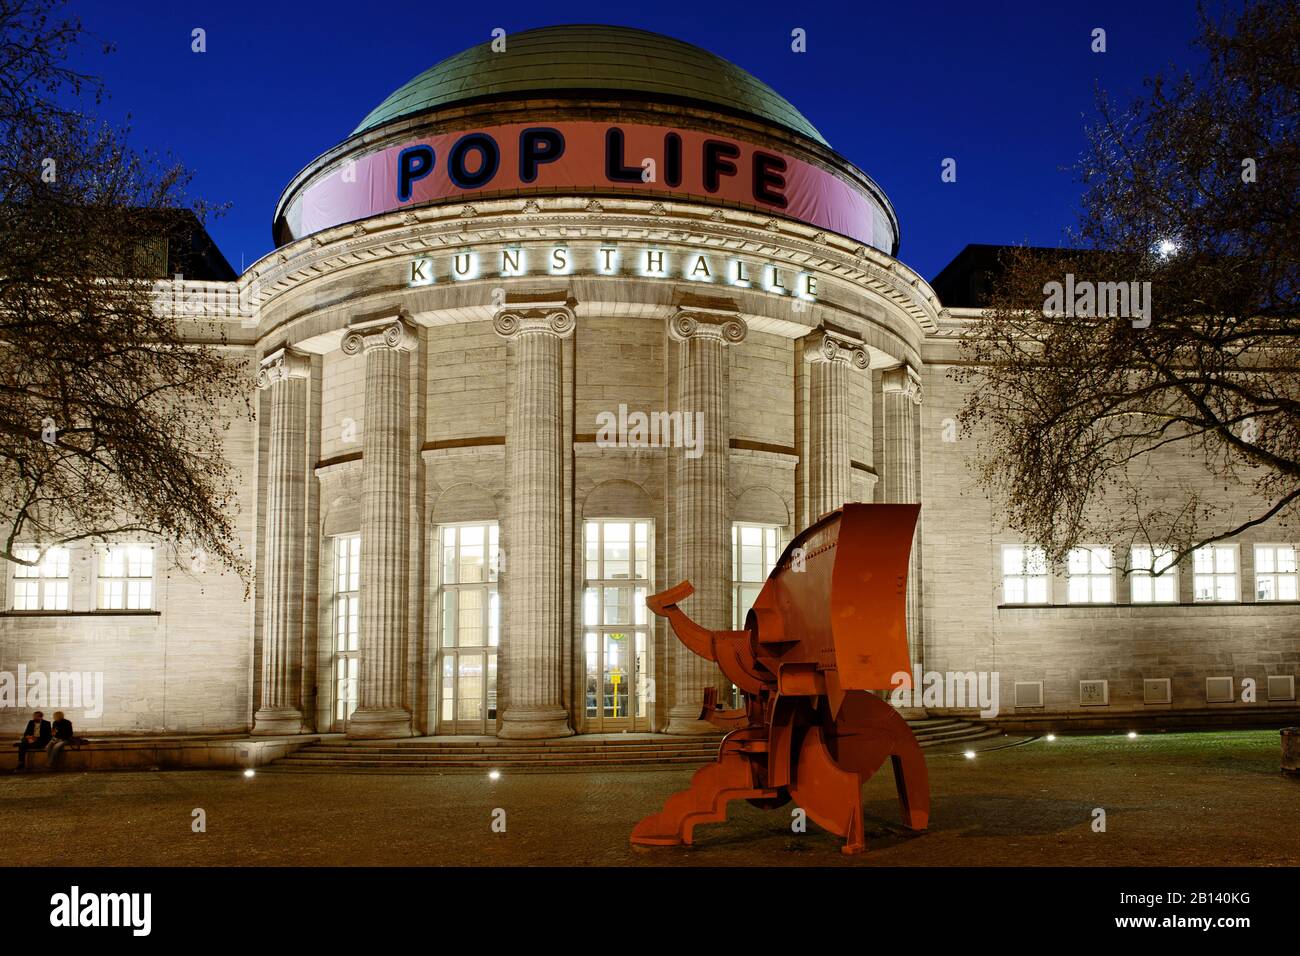 Alte Kunsthalle art gallery, Ballindamm, Free and Hanseatic City of Hamburg, Germany, Europe Stock Photo